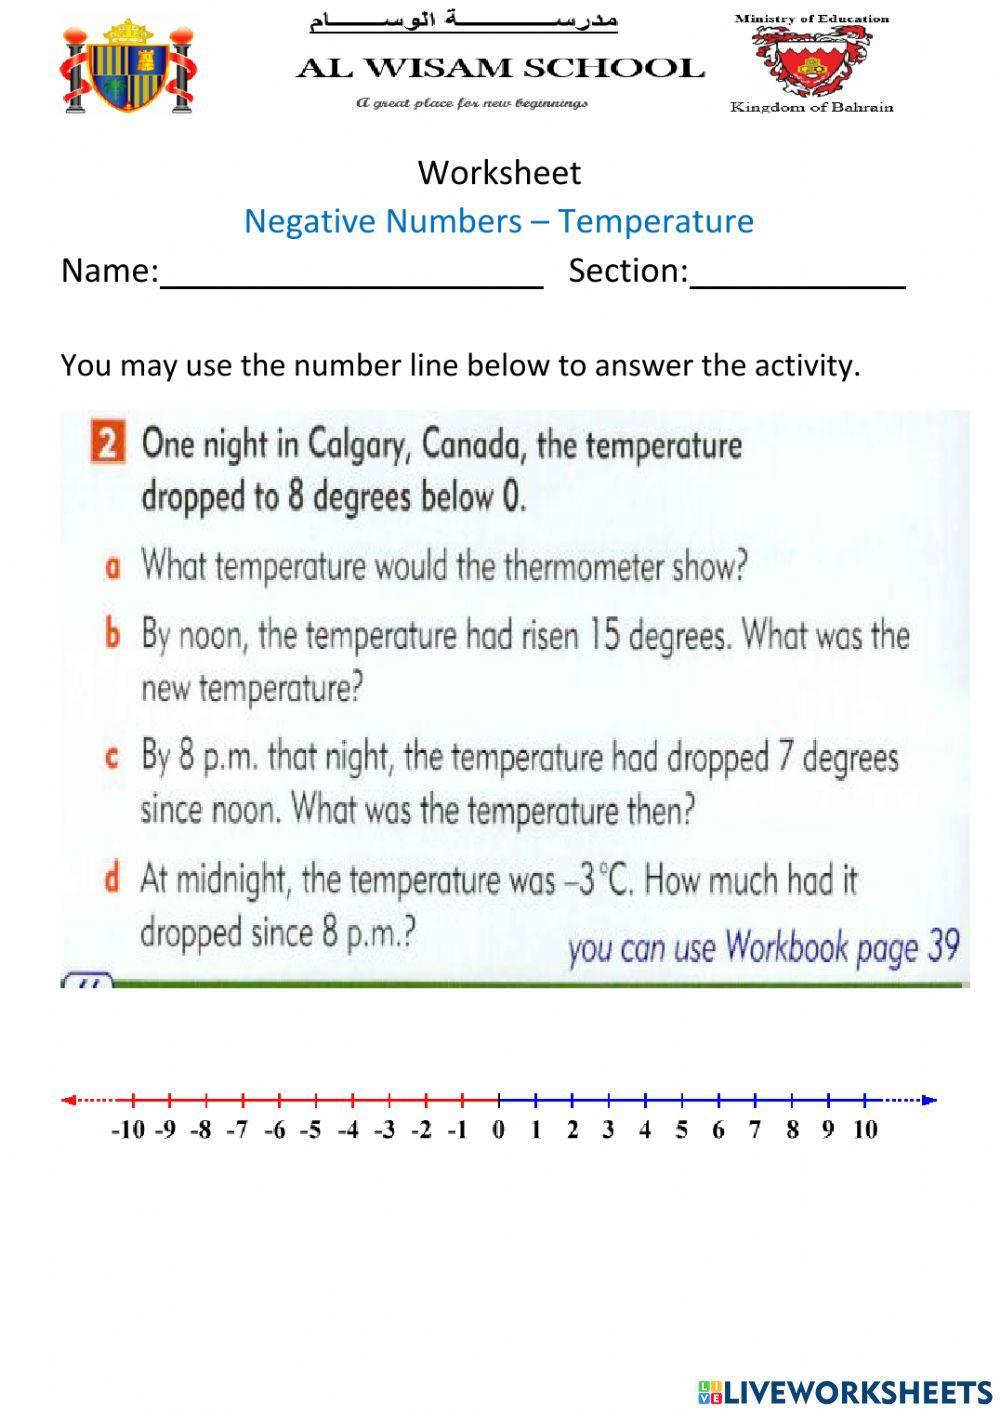 Negative Numbers - Temperature